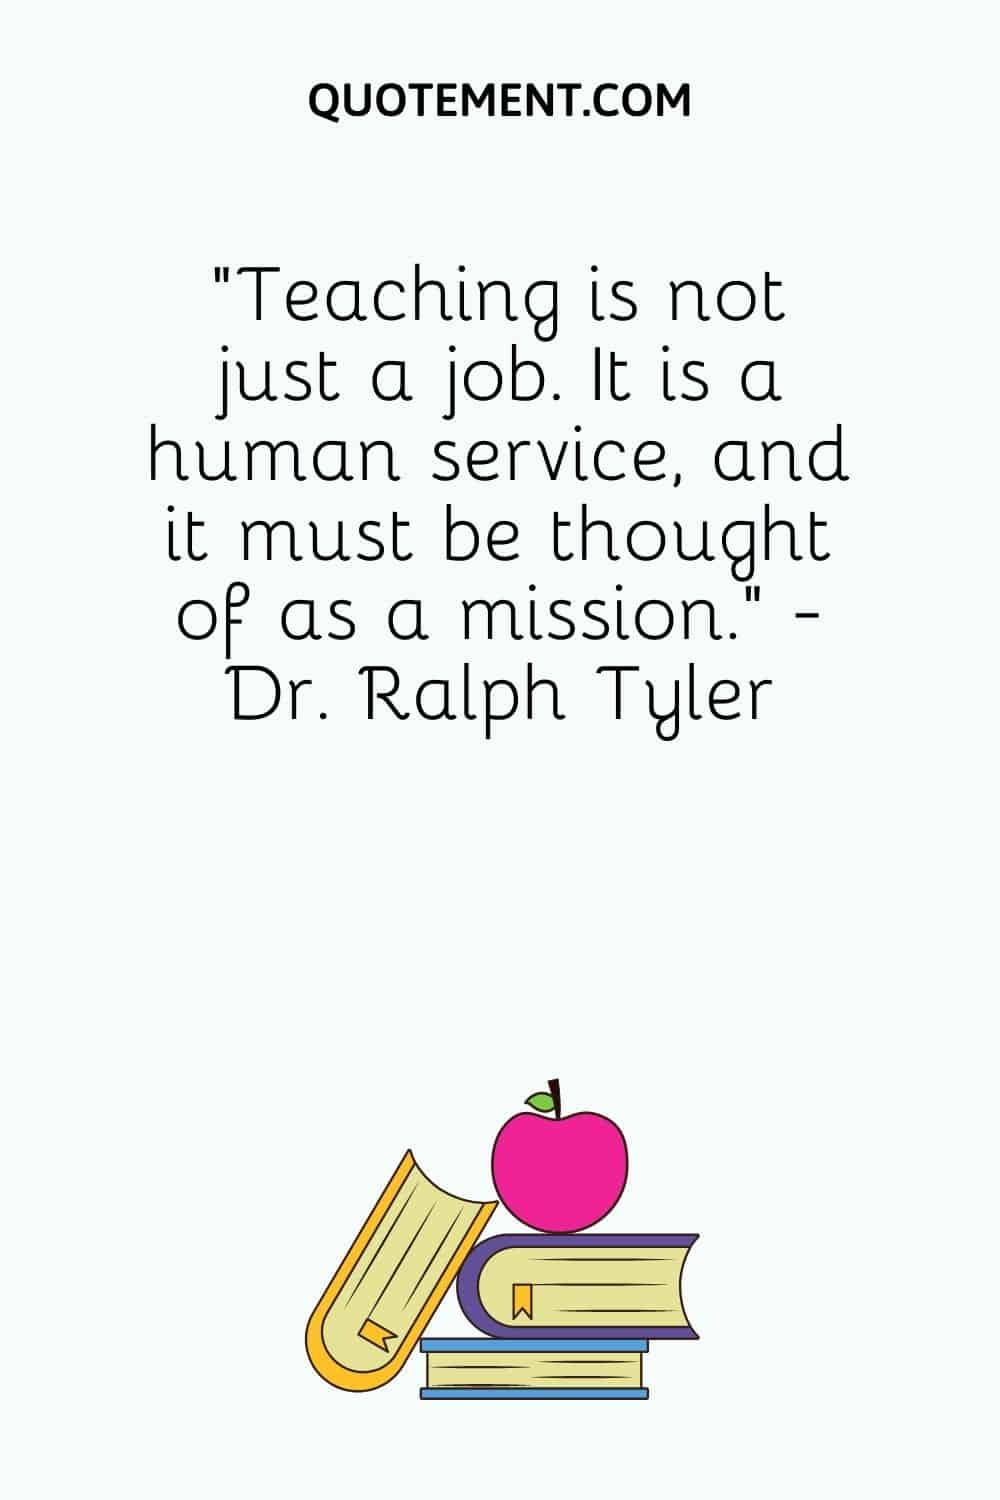 Teaching is not just a job